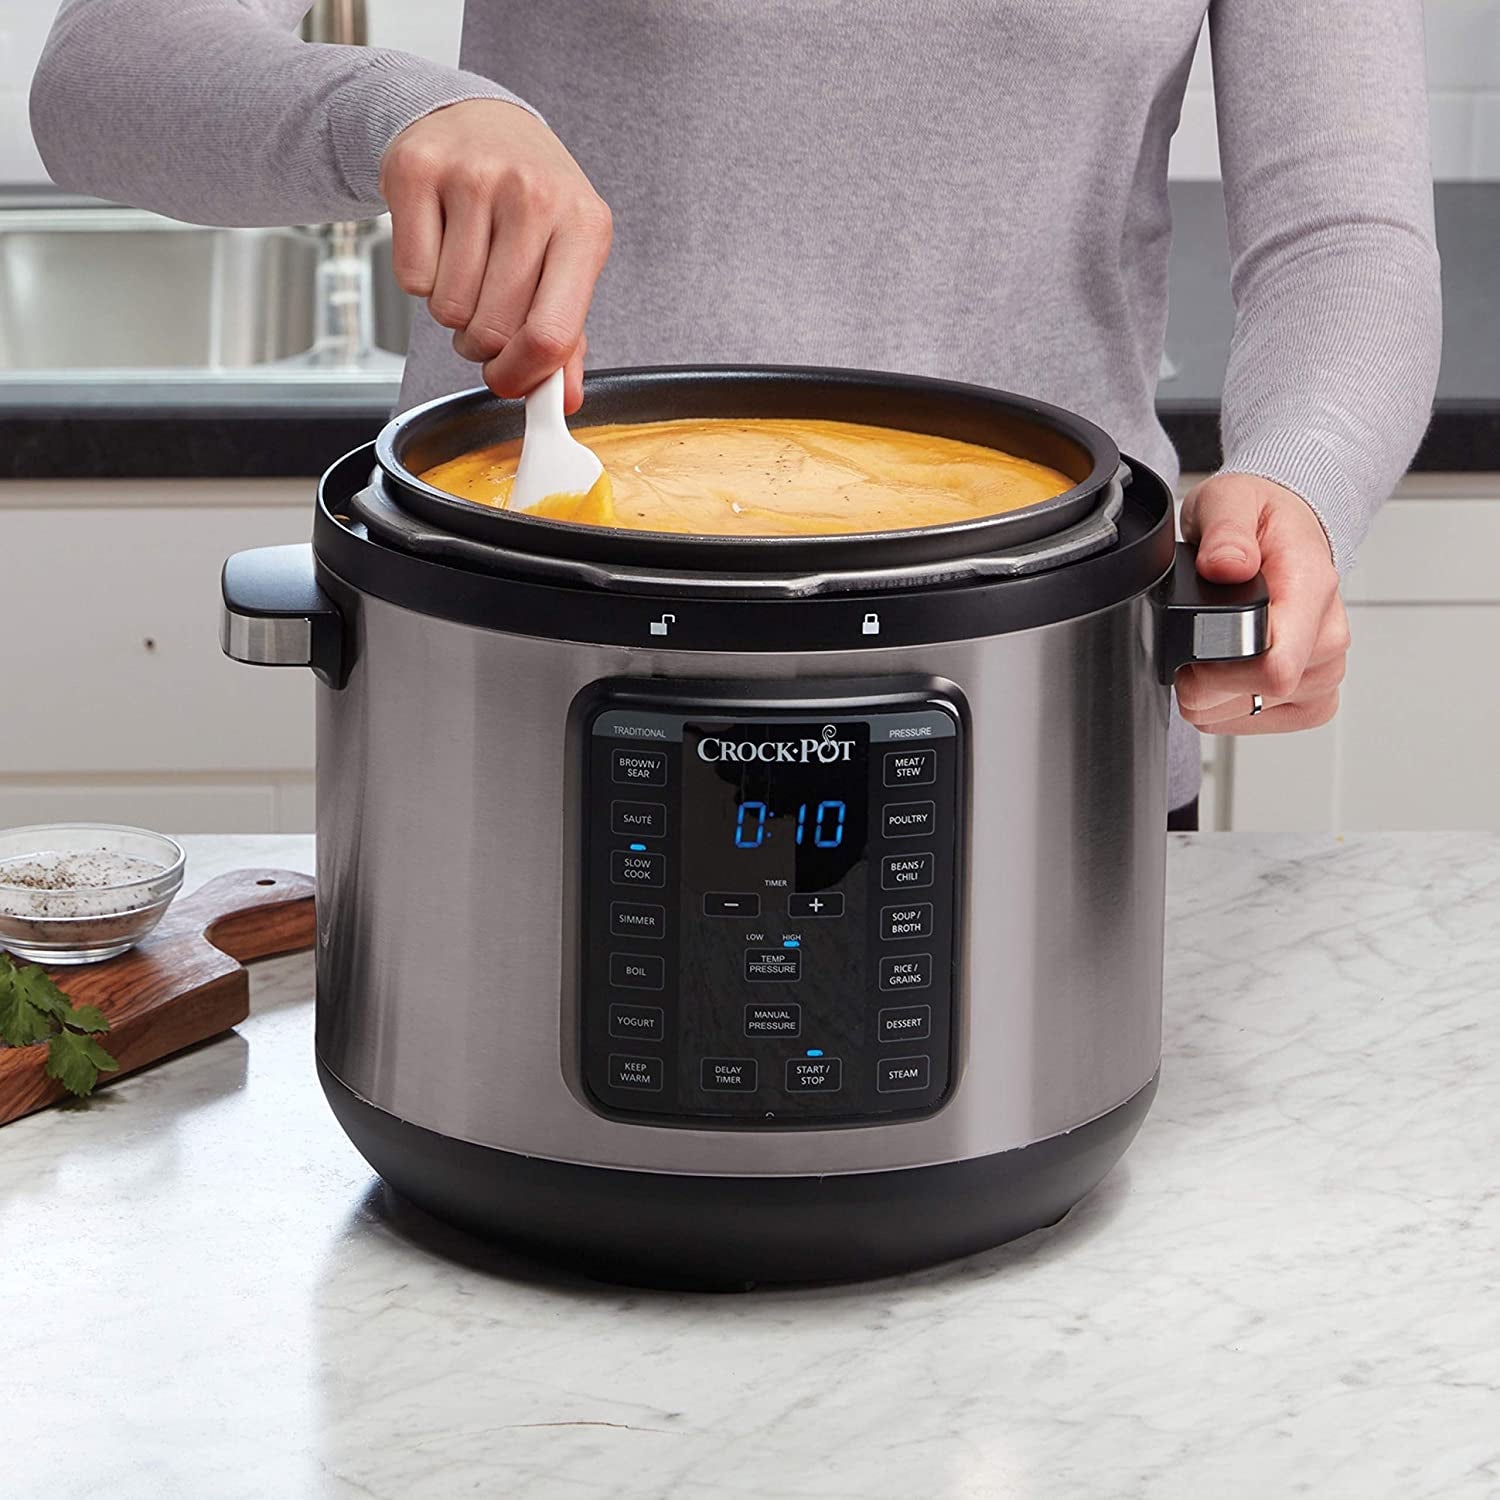 Crock-pot 8-Quart Multi-Use XL Express Crock Programmable Slow Cooker